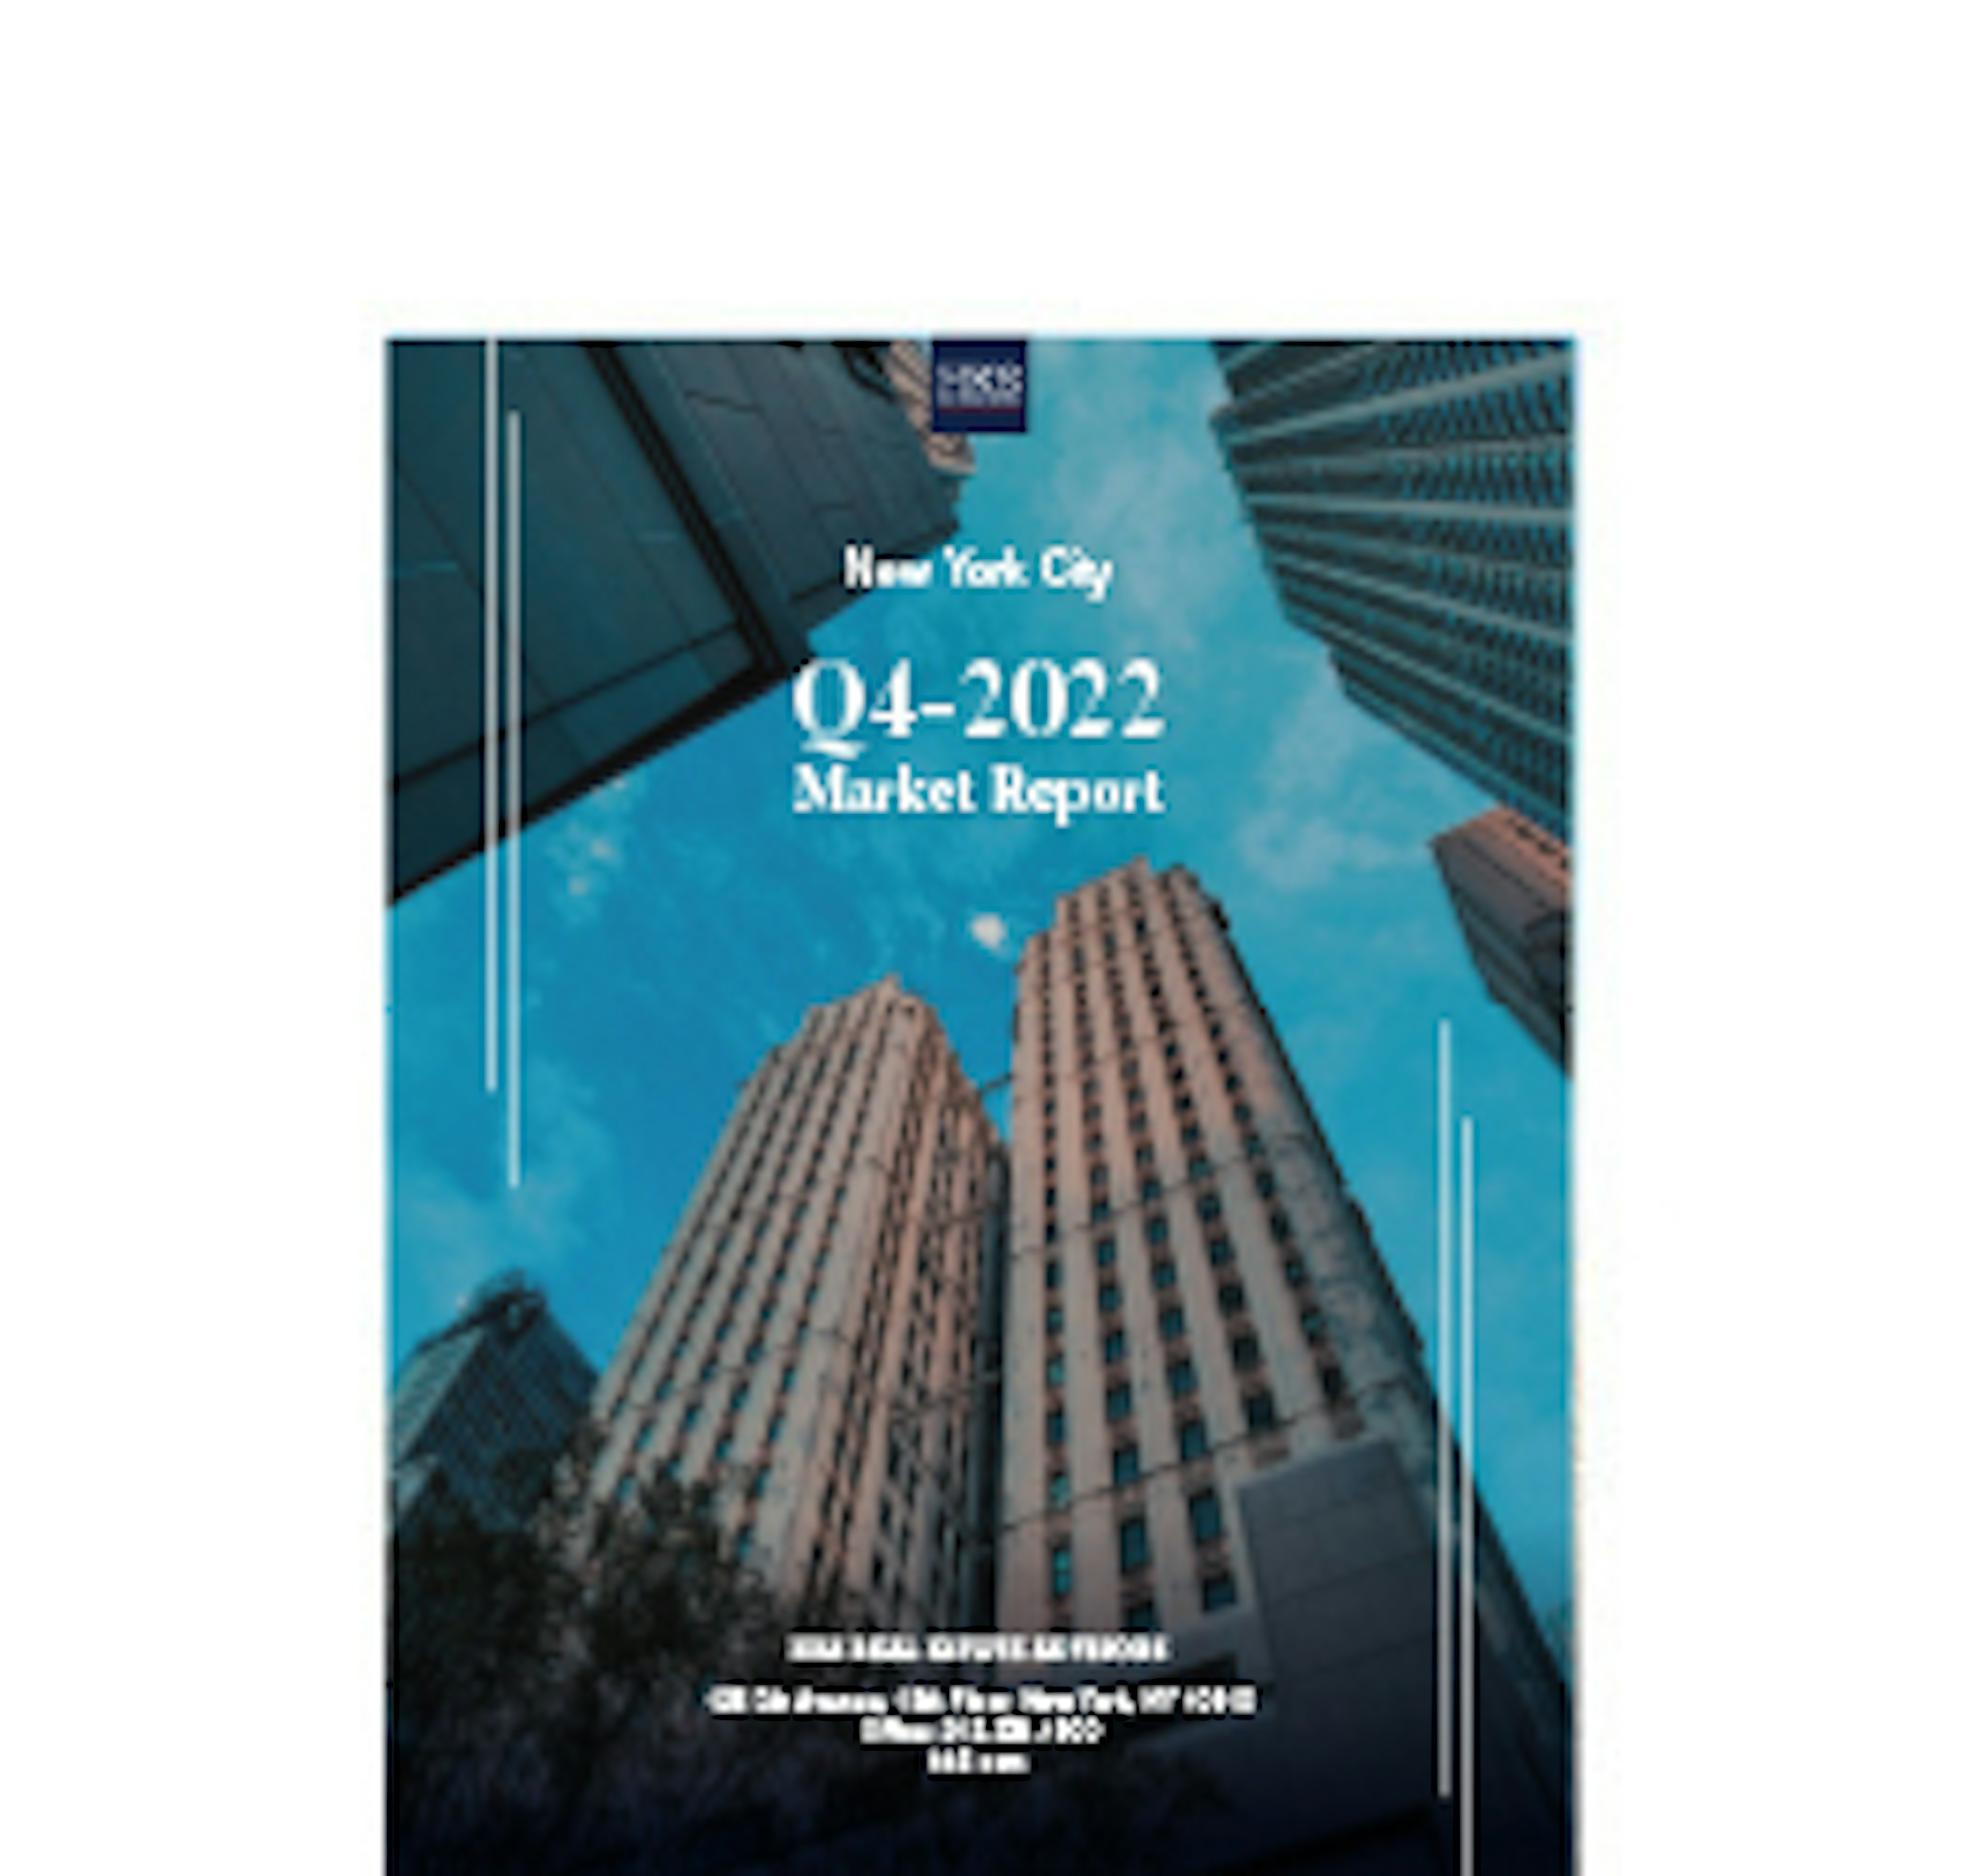 NEW YORK CITY / Q4 2022 / Market Report